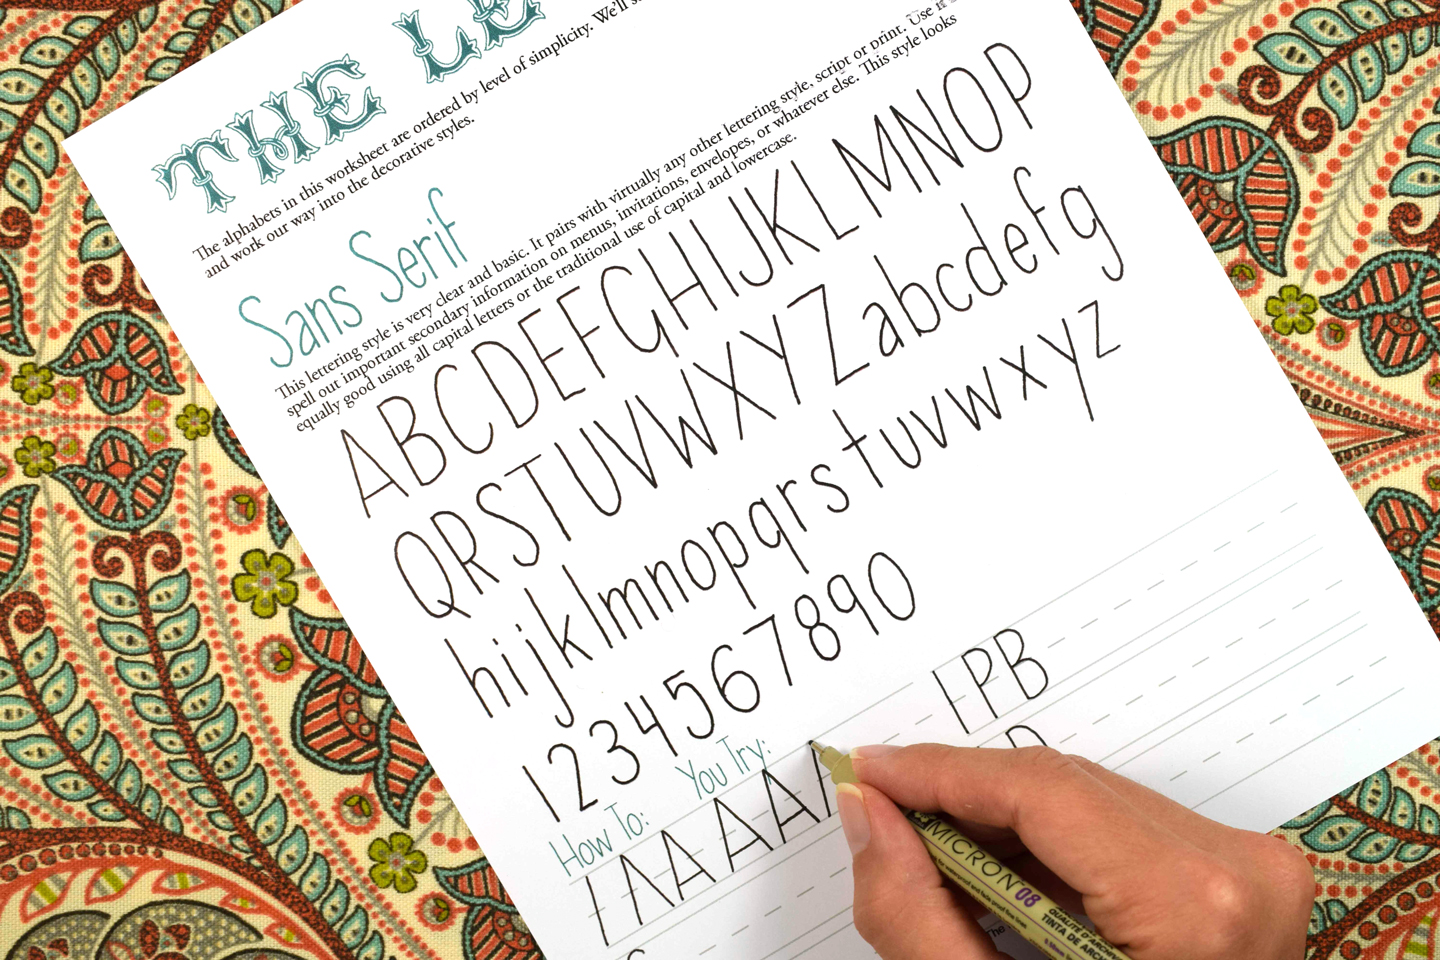 Rediscovering Hand-Lettering: Why TPK’s Original Hand-Lettering Worksheet Set is Awesome